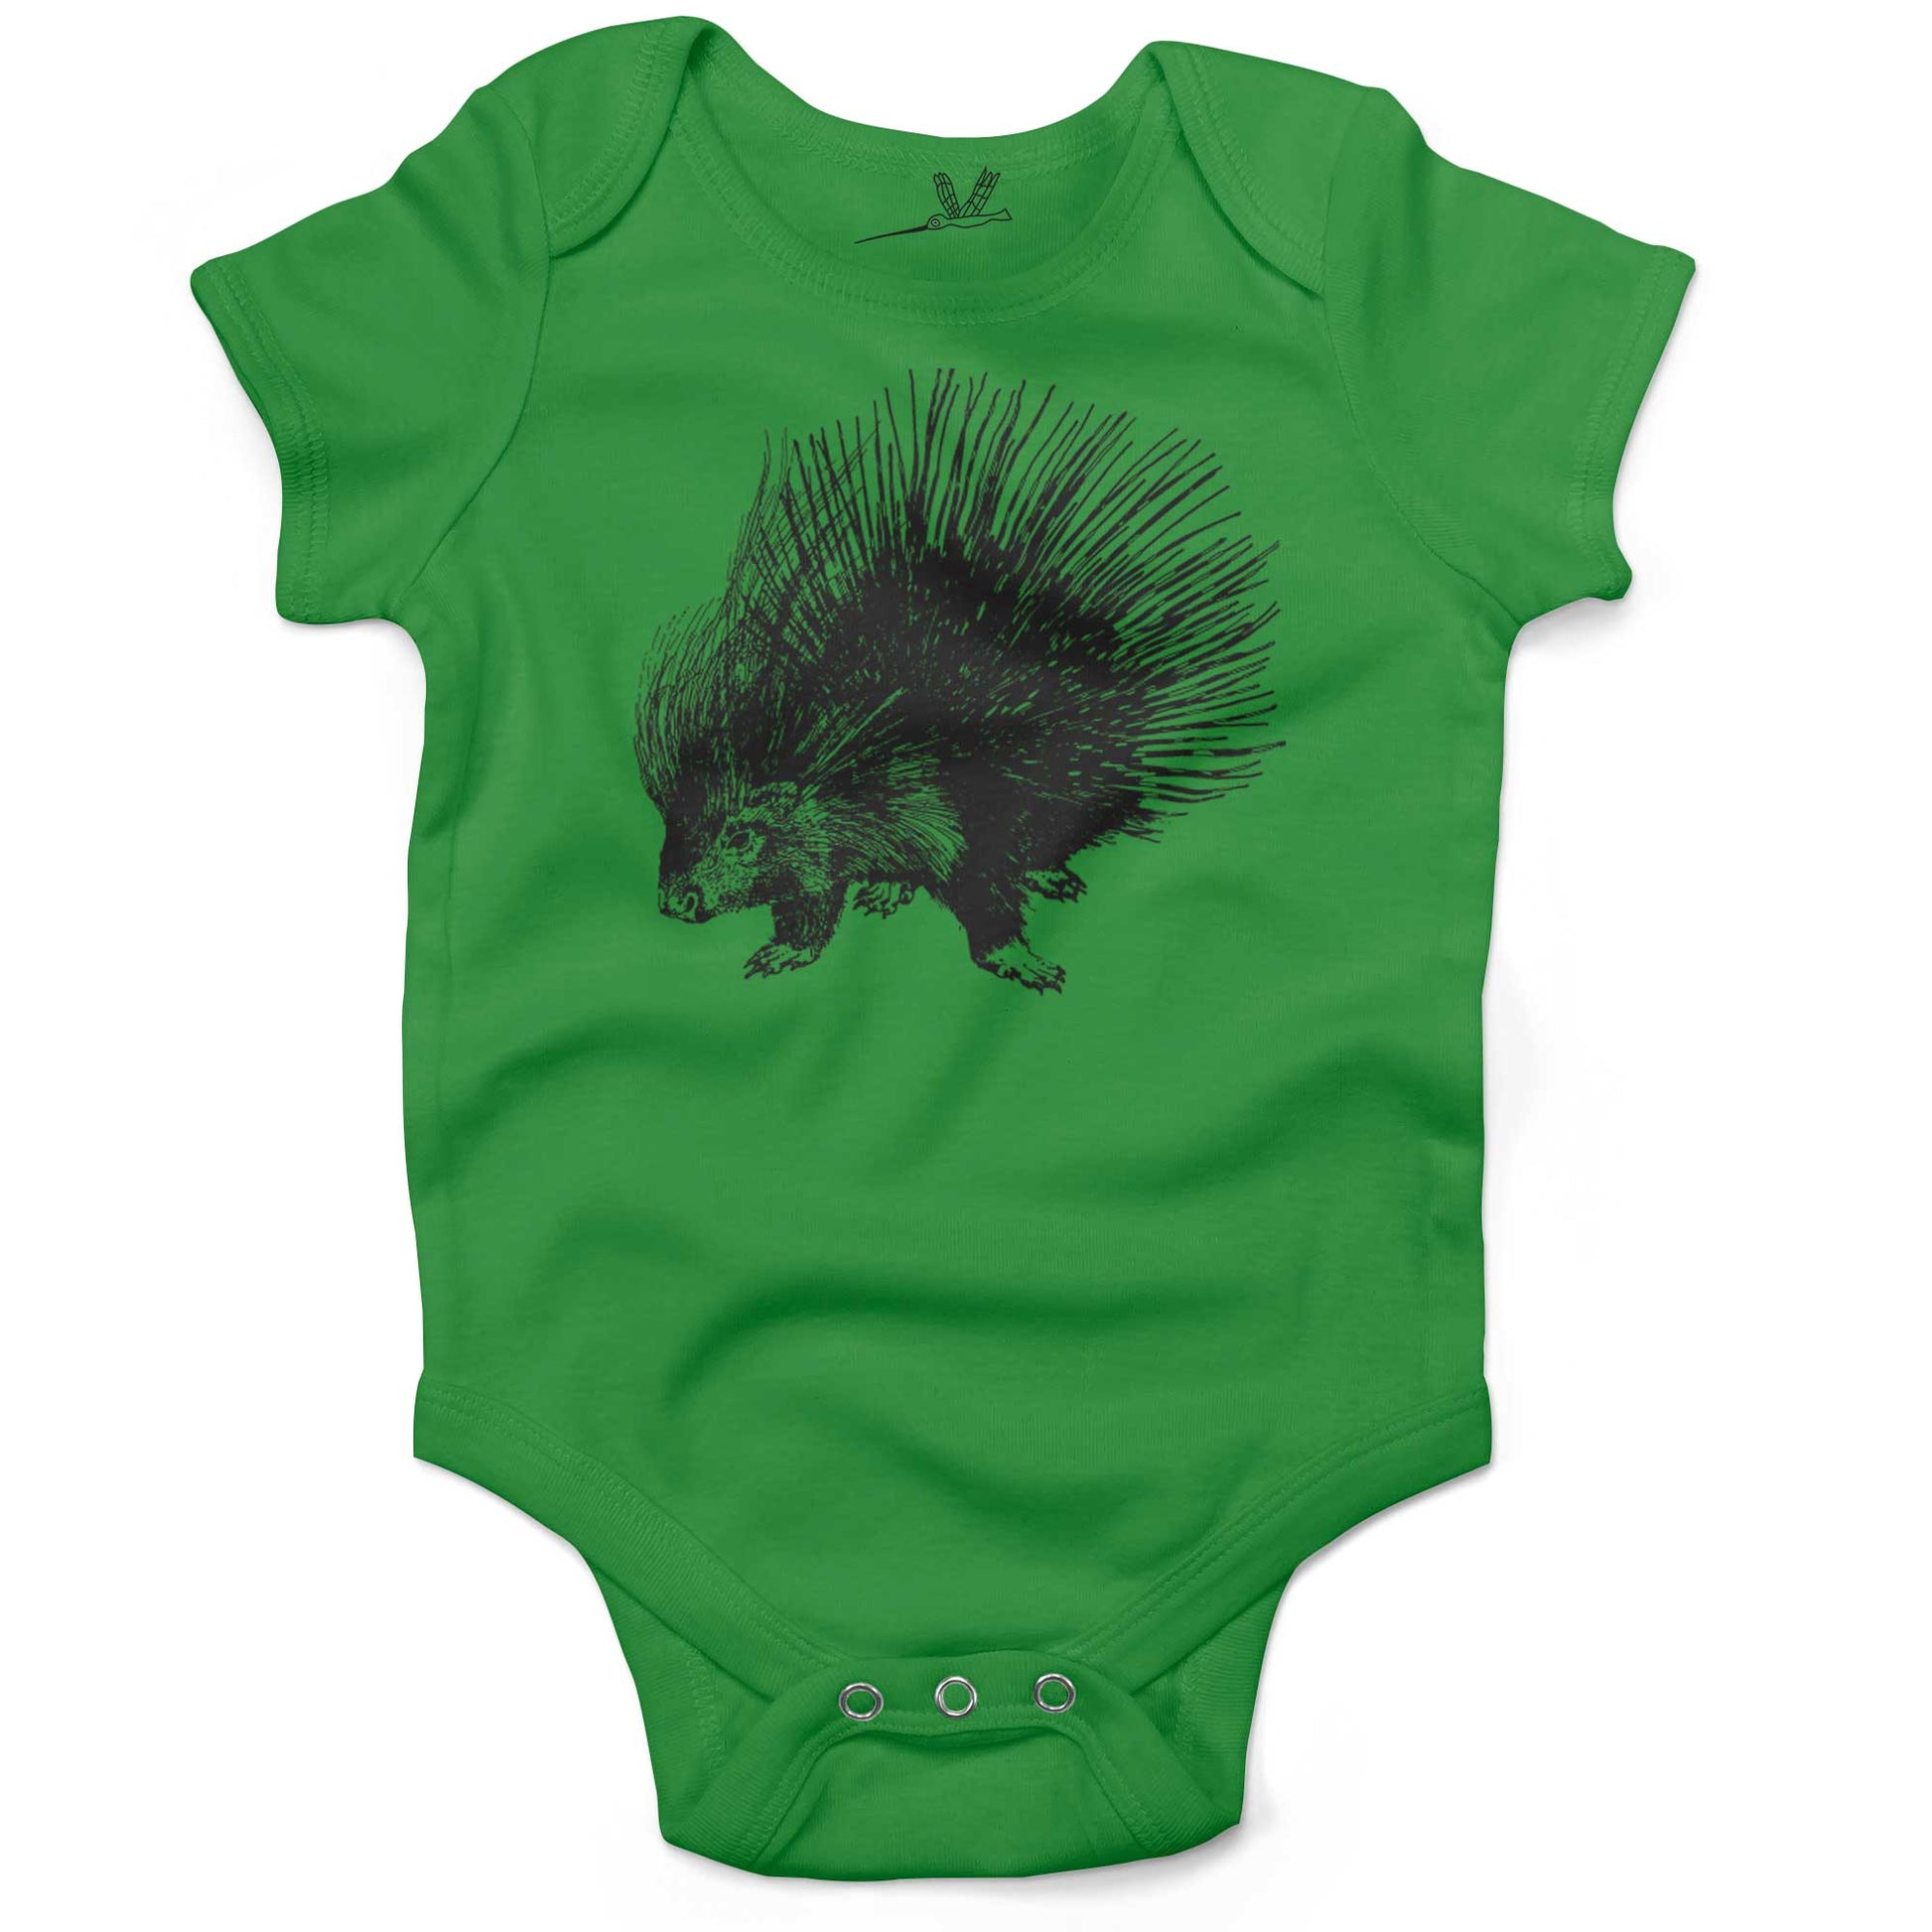 Cute Porcupine Infant Bodysuit or Raglan Tee-Grass Green-3-6 months